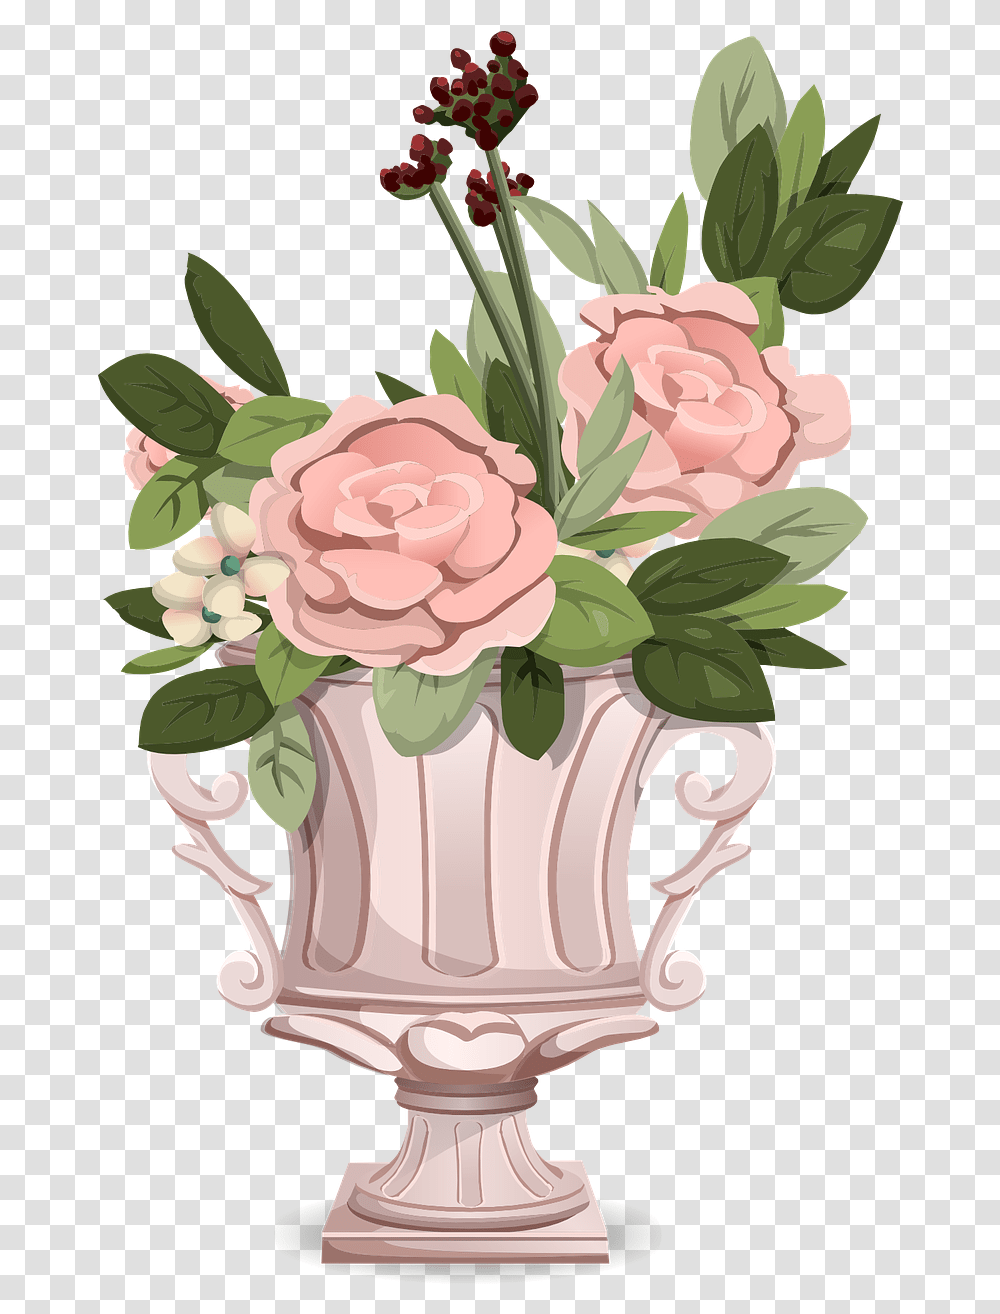 Bouquet Flowers Roses Free Vector Graphic On Pixabay Flower Bouquet, Plant, Floral Design, Pattern, Graphics Transparent Png